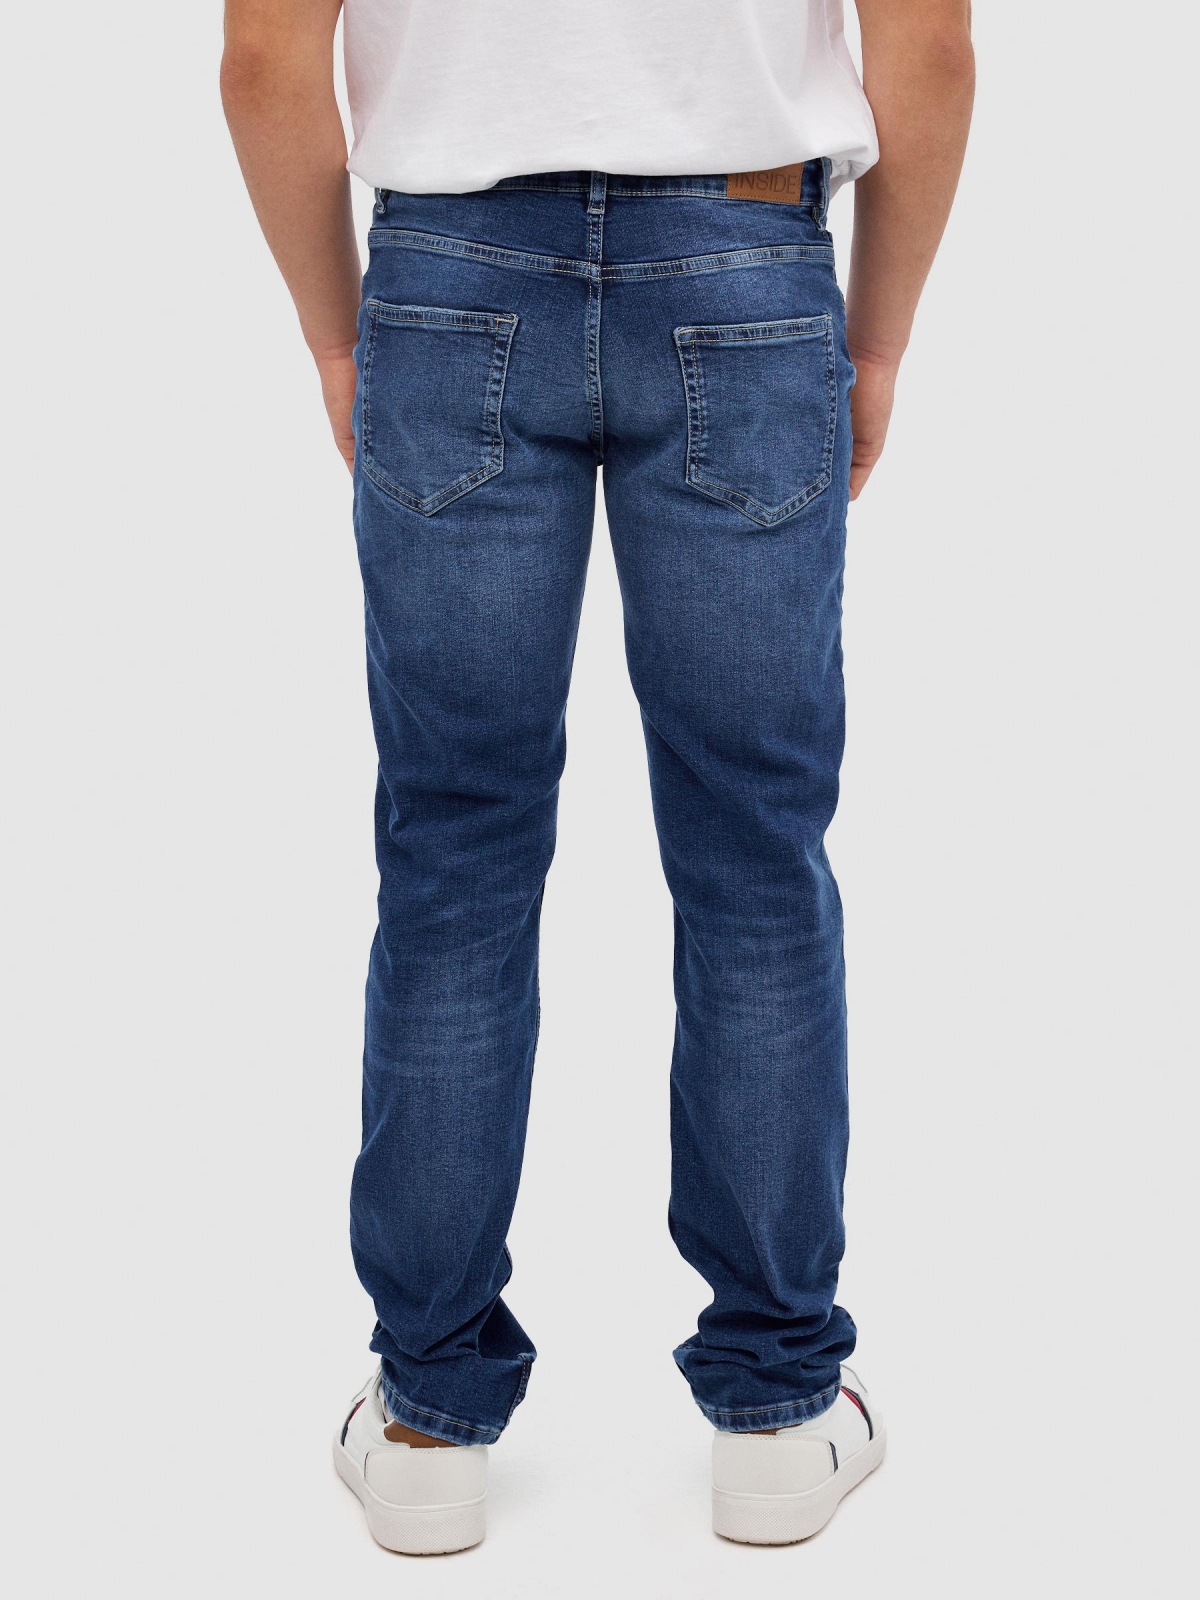 Regular jeans blue middle back view